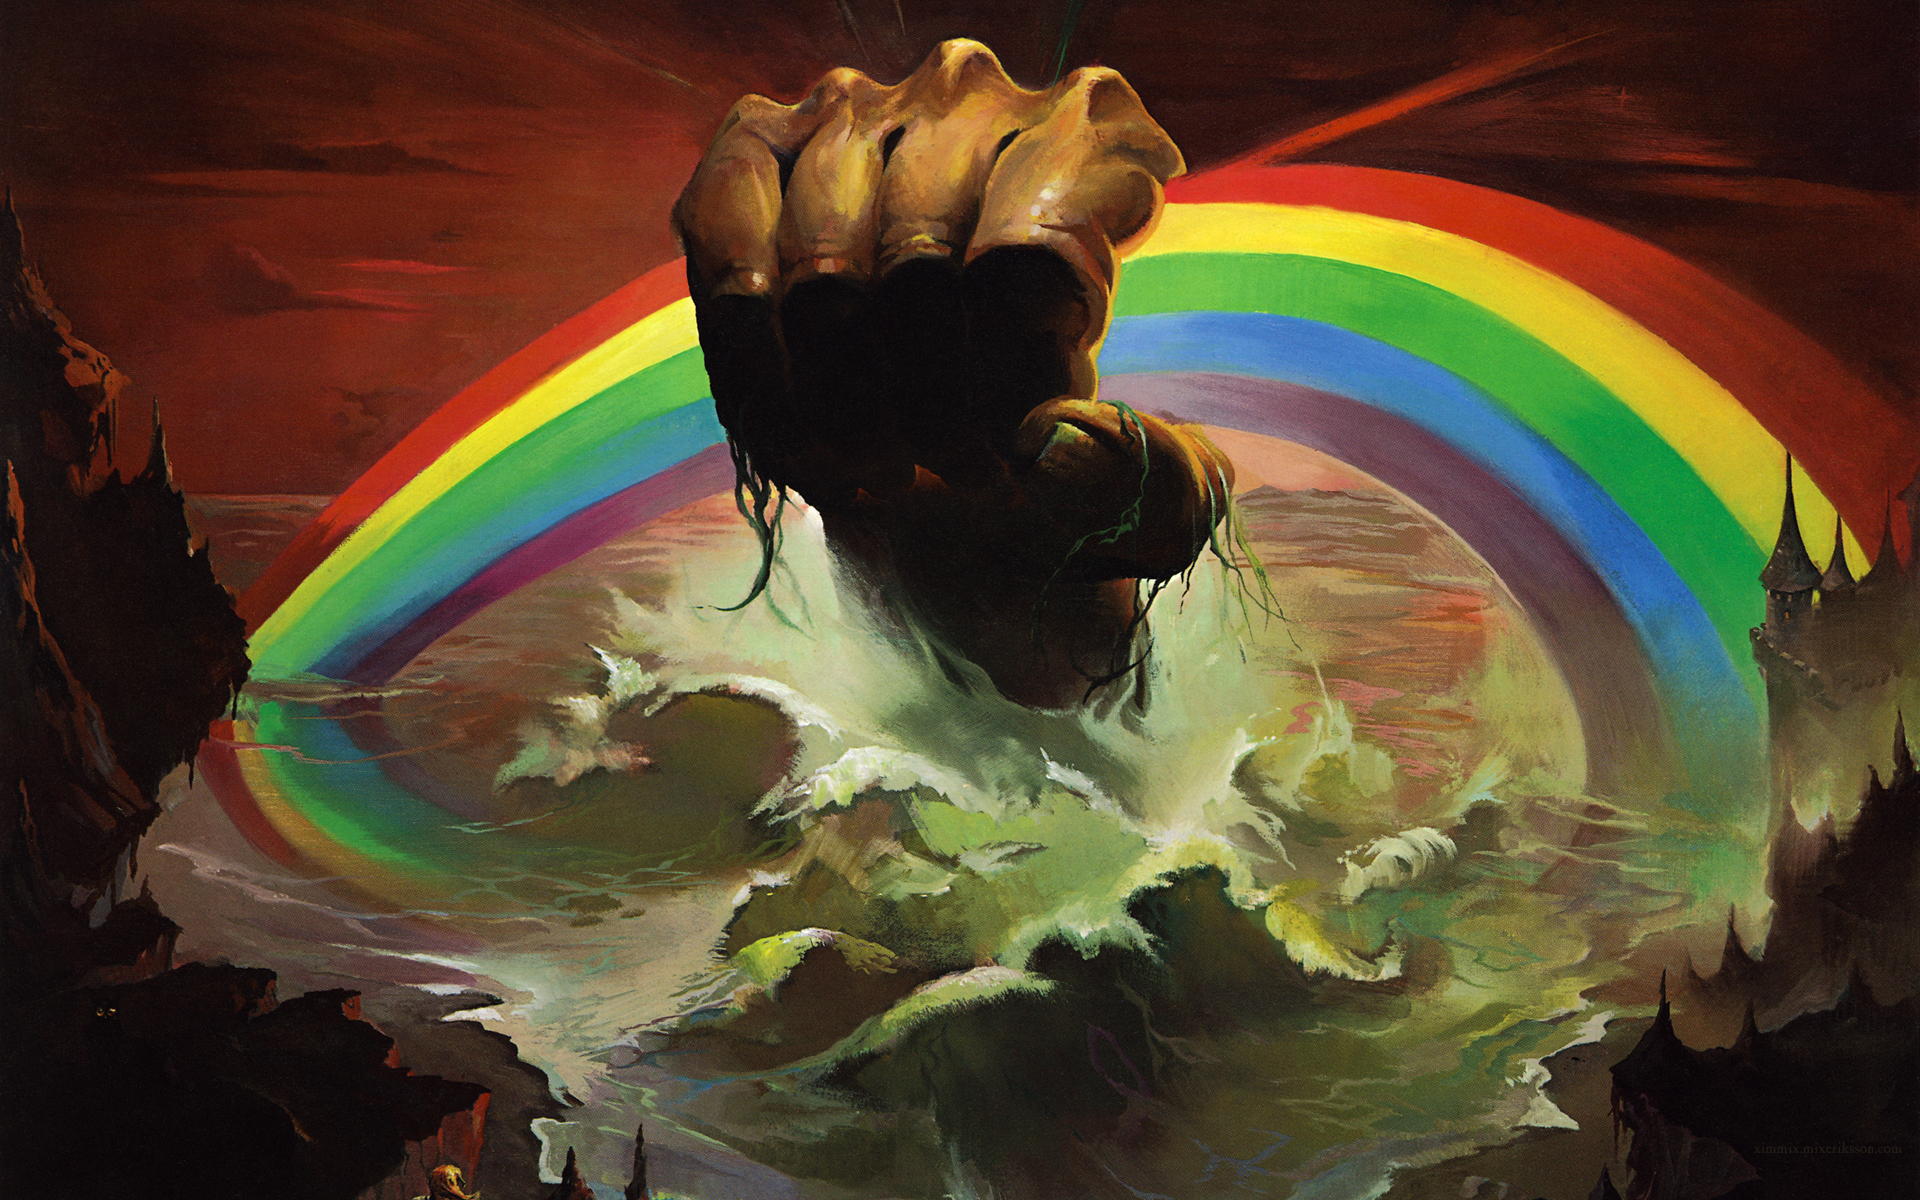 album cover, hard rock, rainbow, music, heavy metal